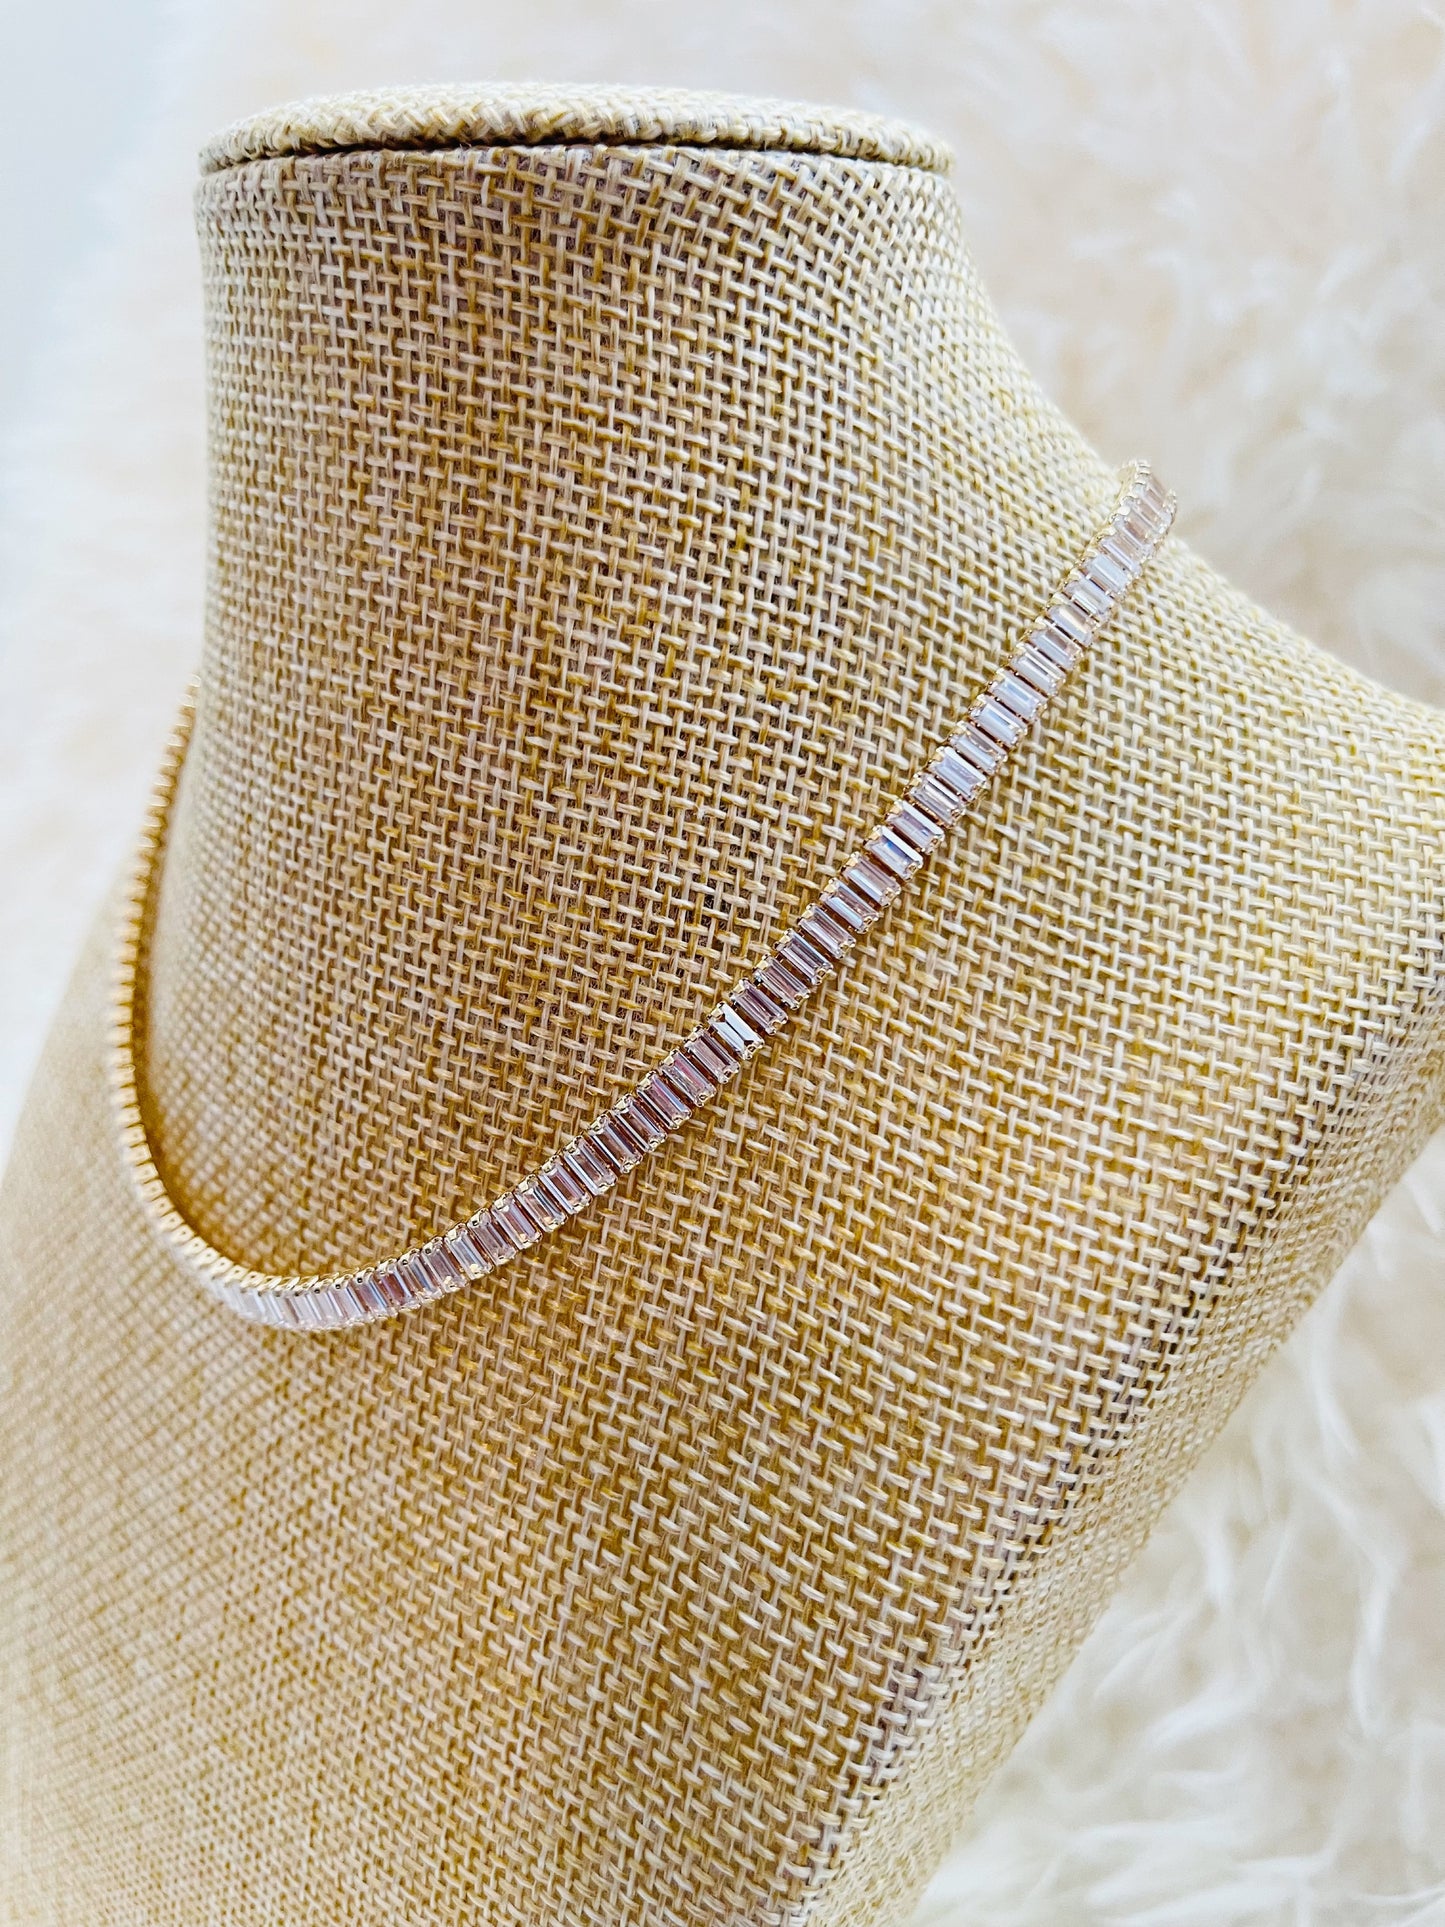 White Crystal Necklace and bracelet set